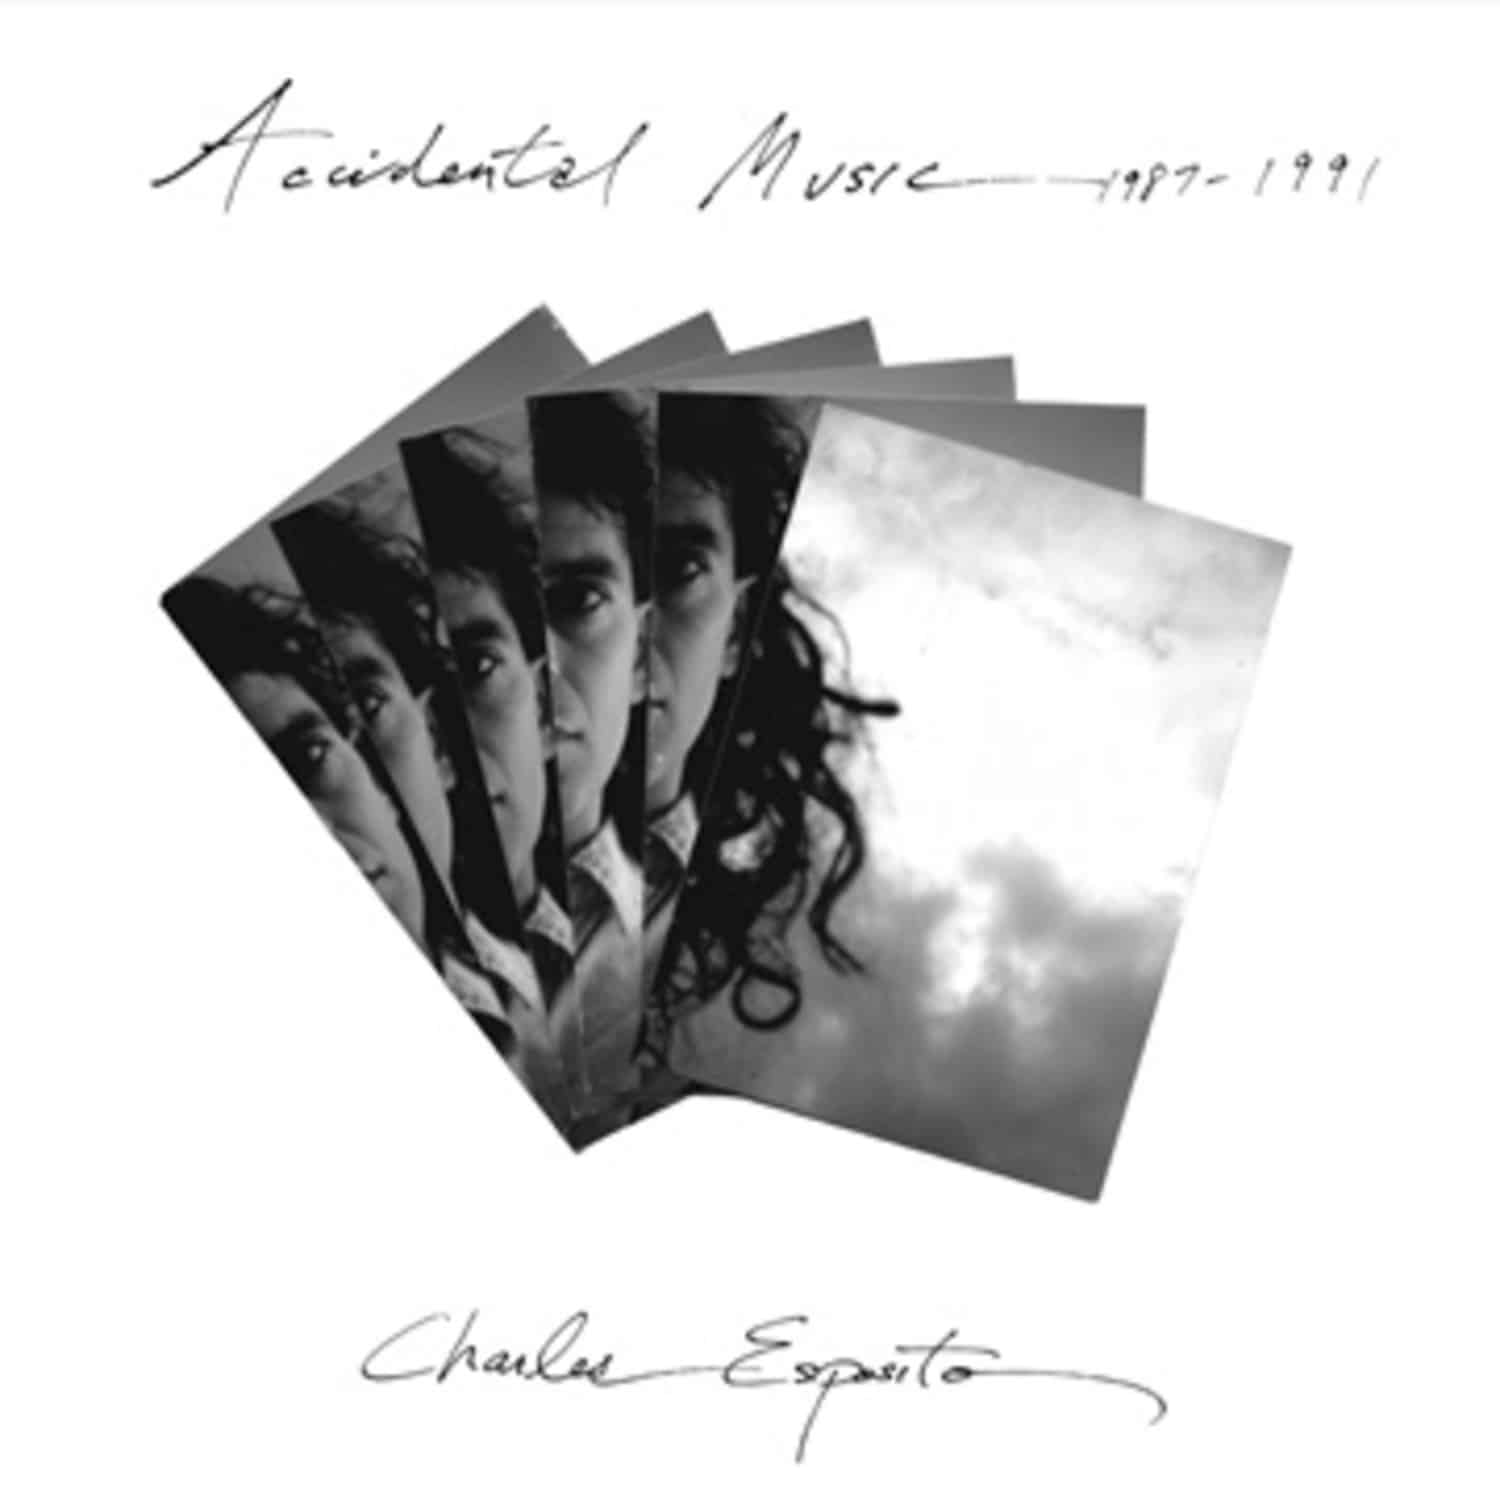 Charles Esposito - ACCIDENTAL MUSIC 1987-1991 